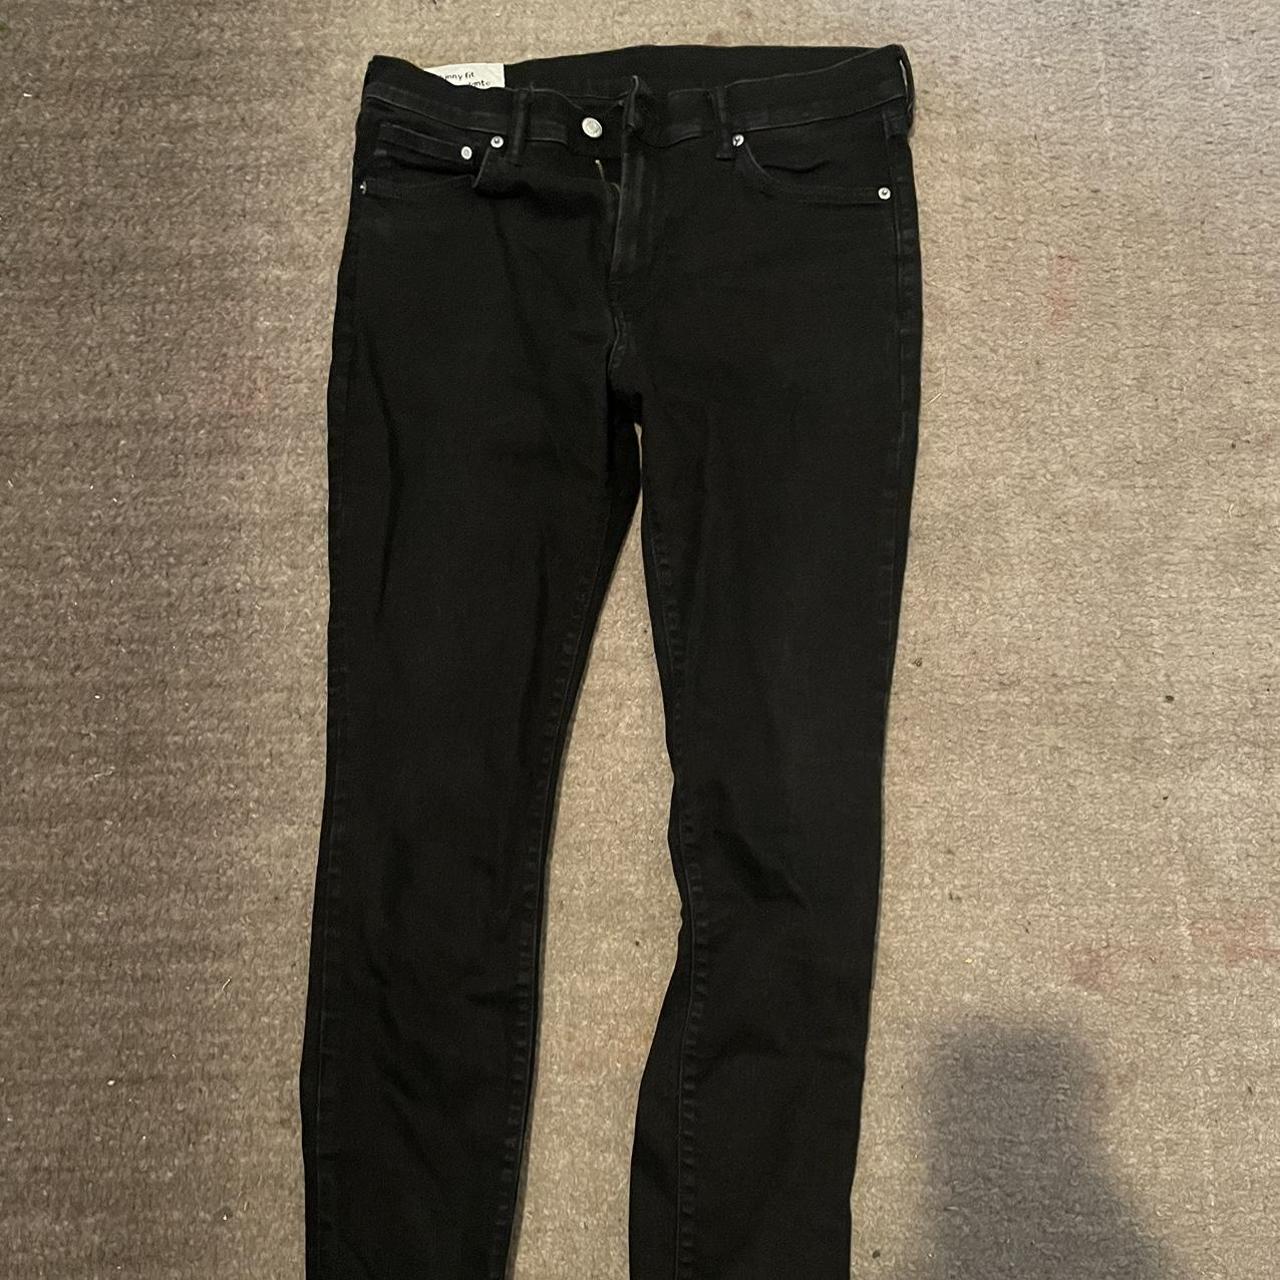 Black Skinny Fit jeans Size 34X32 - Depop